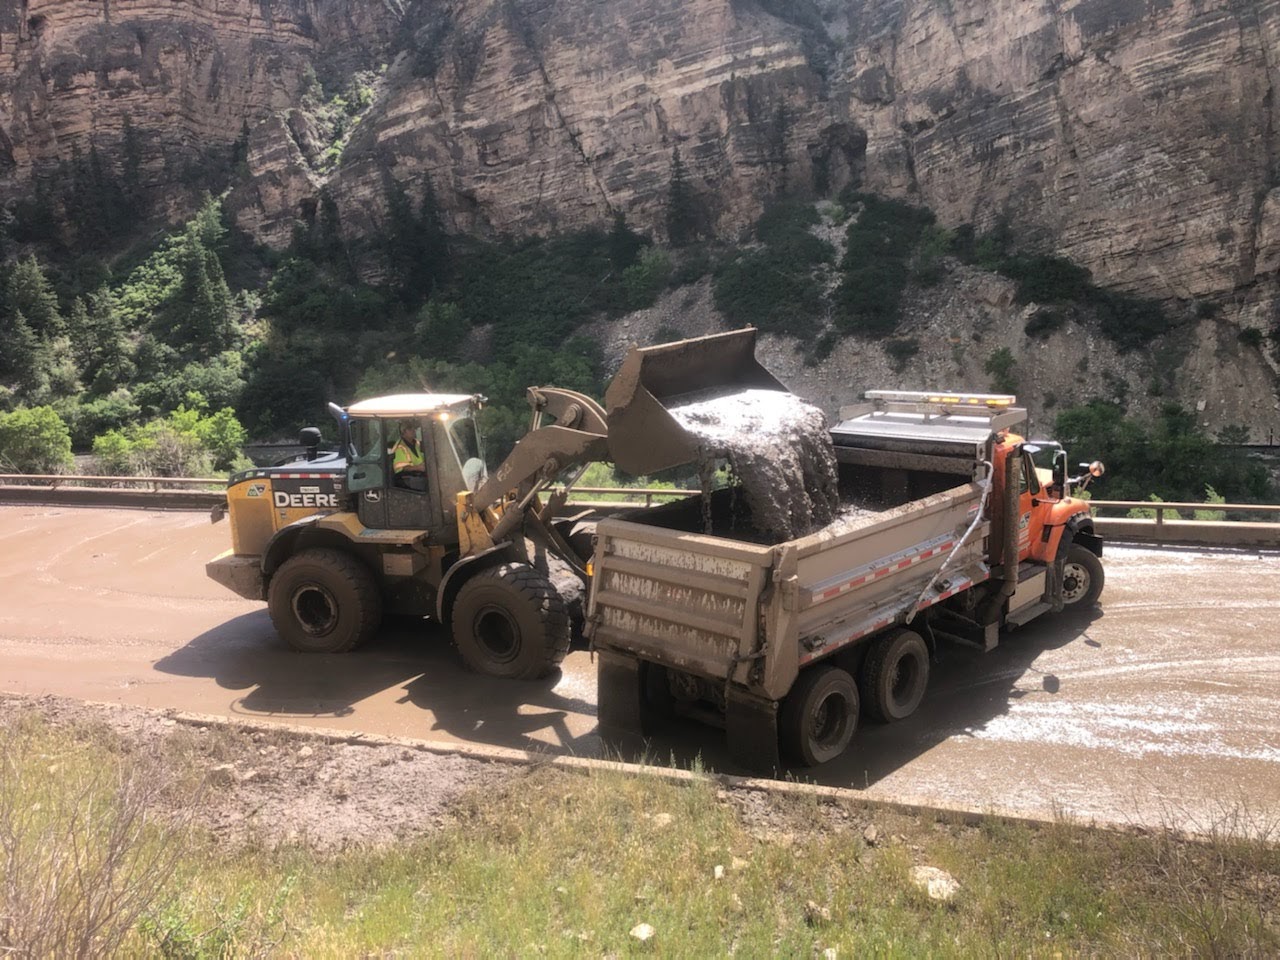 Glenwood Canyon mudslide tractor dumping mud during clean up detail image